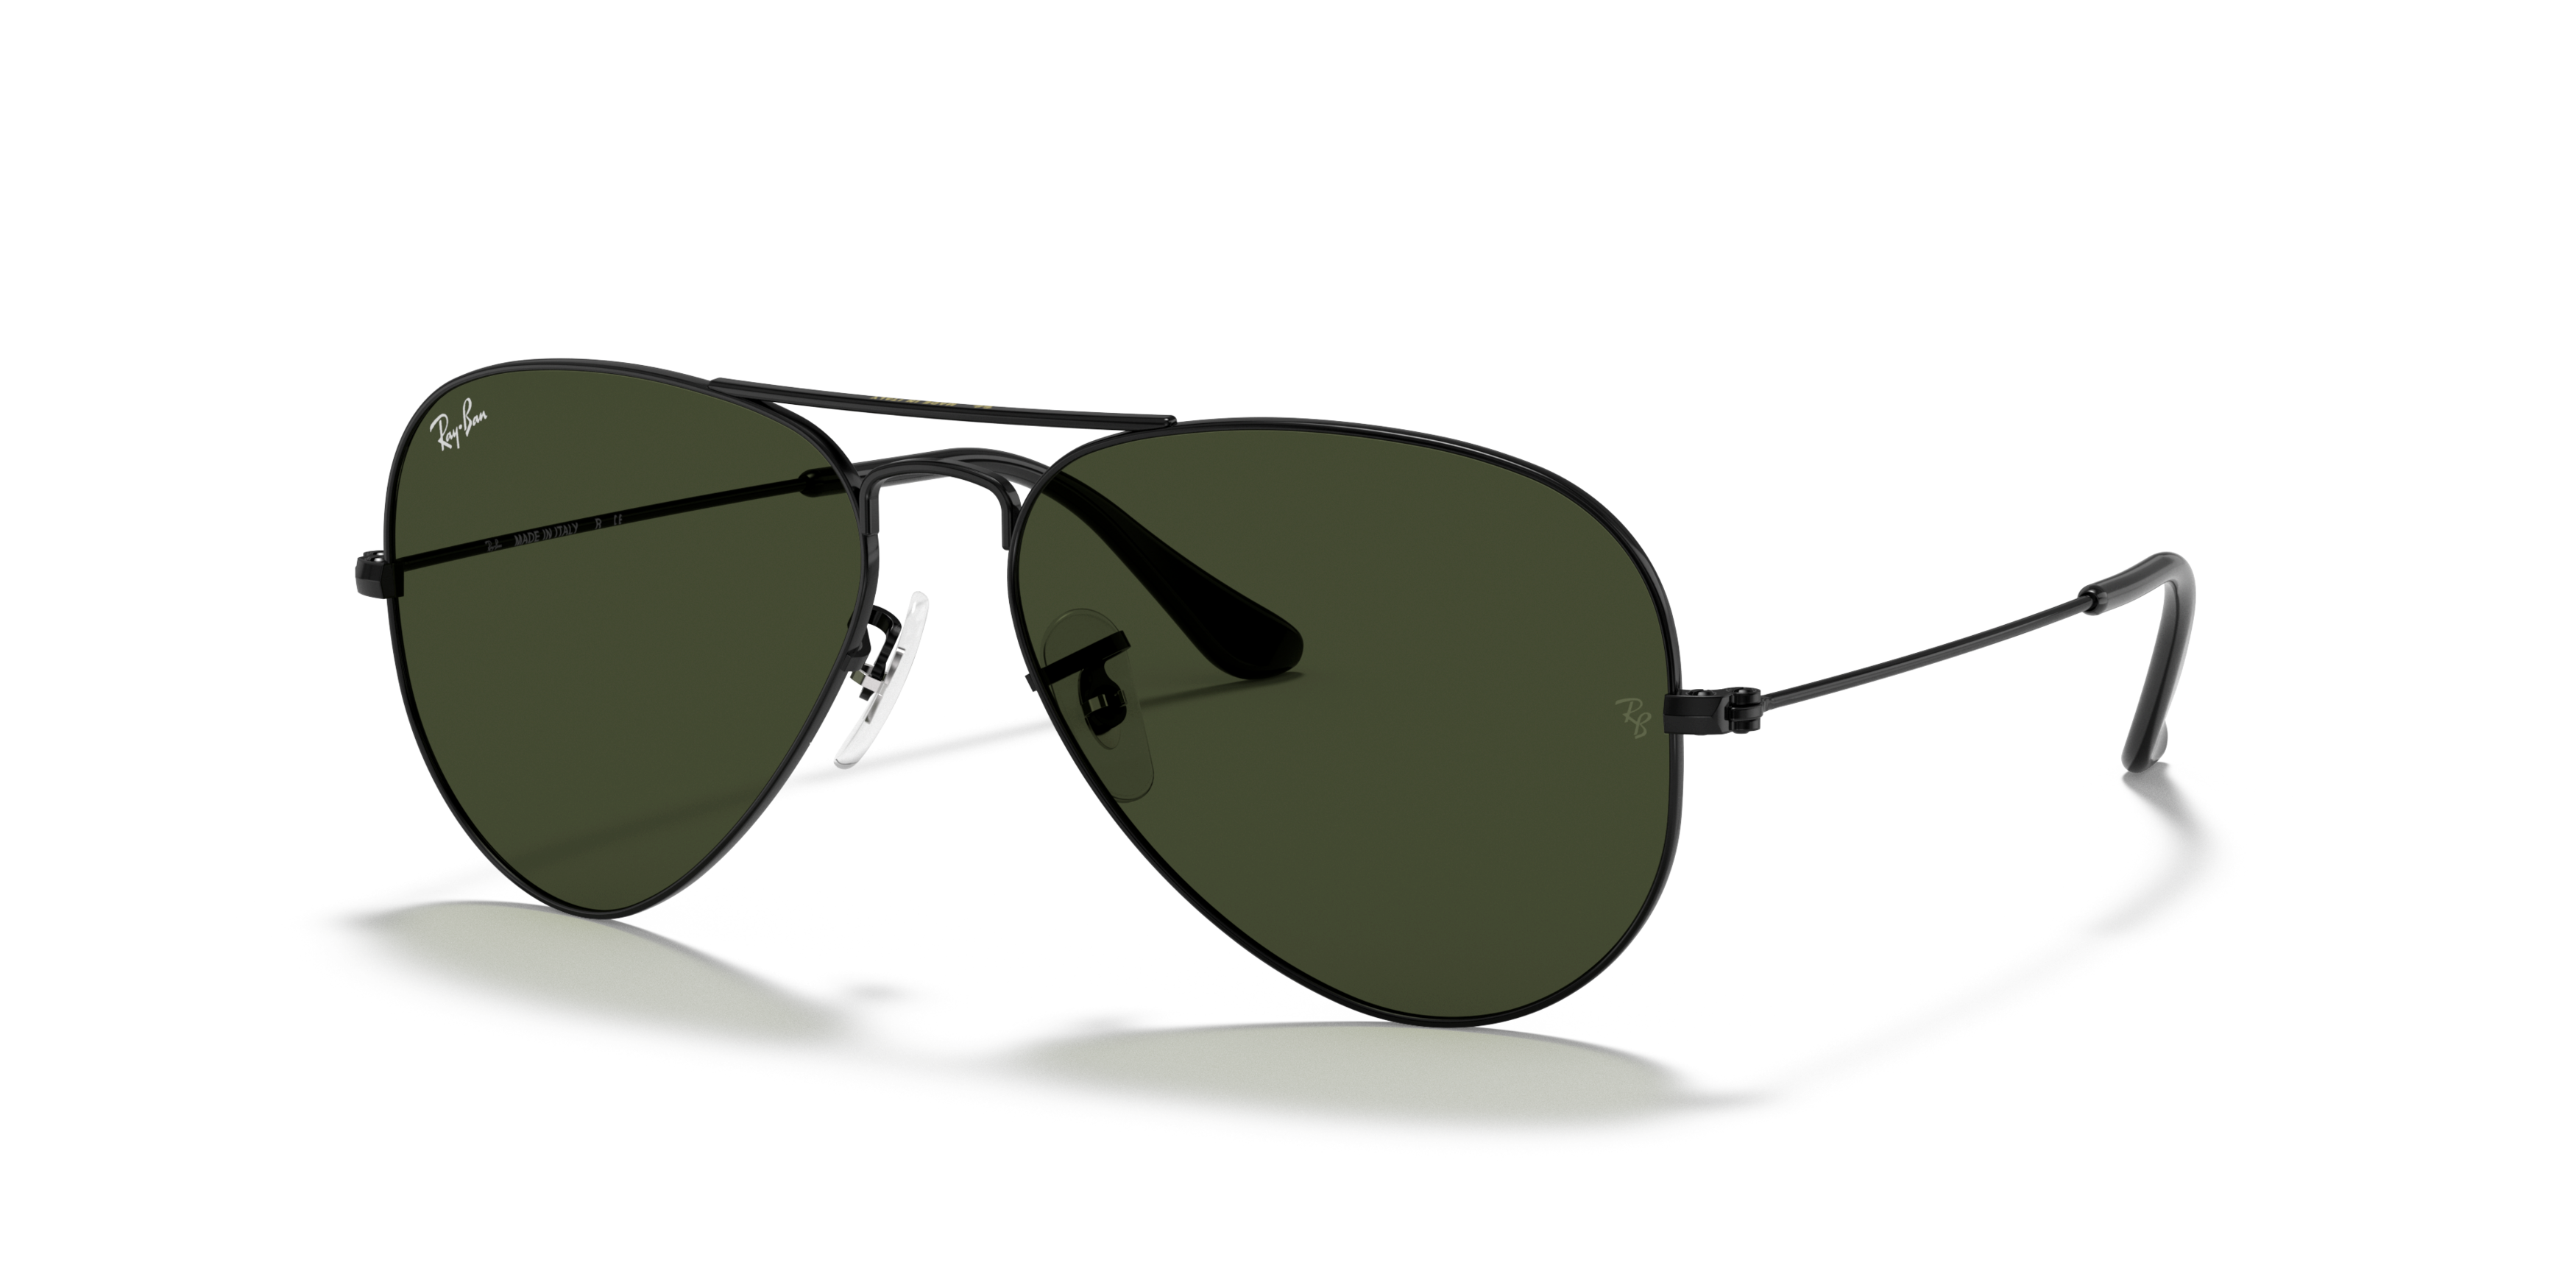 Angle_Left01 Ray-Ban Aviator RB 3025 (112/19) Sunglasses Green / Gold